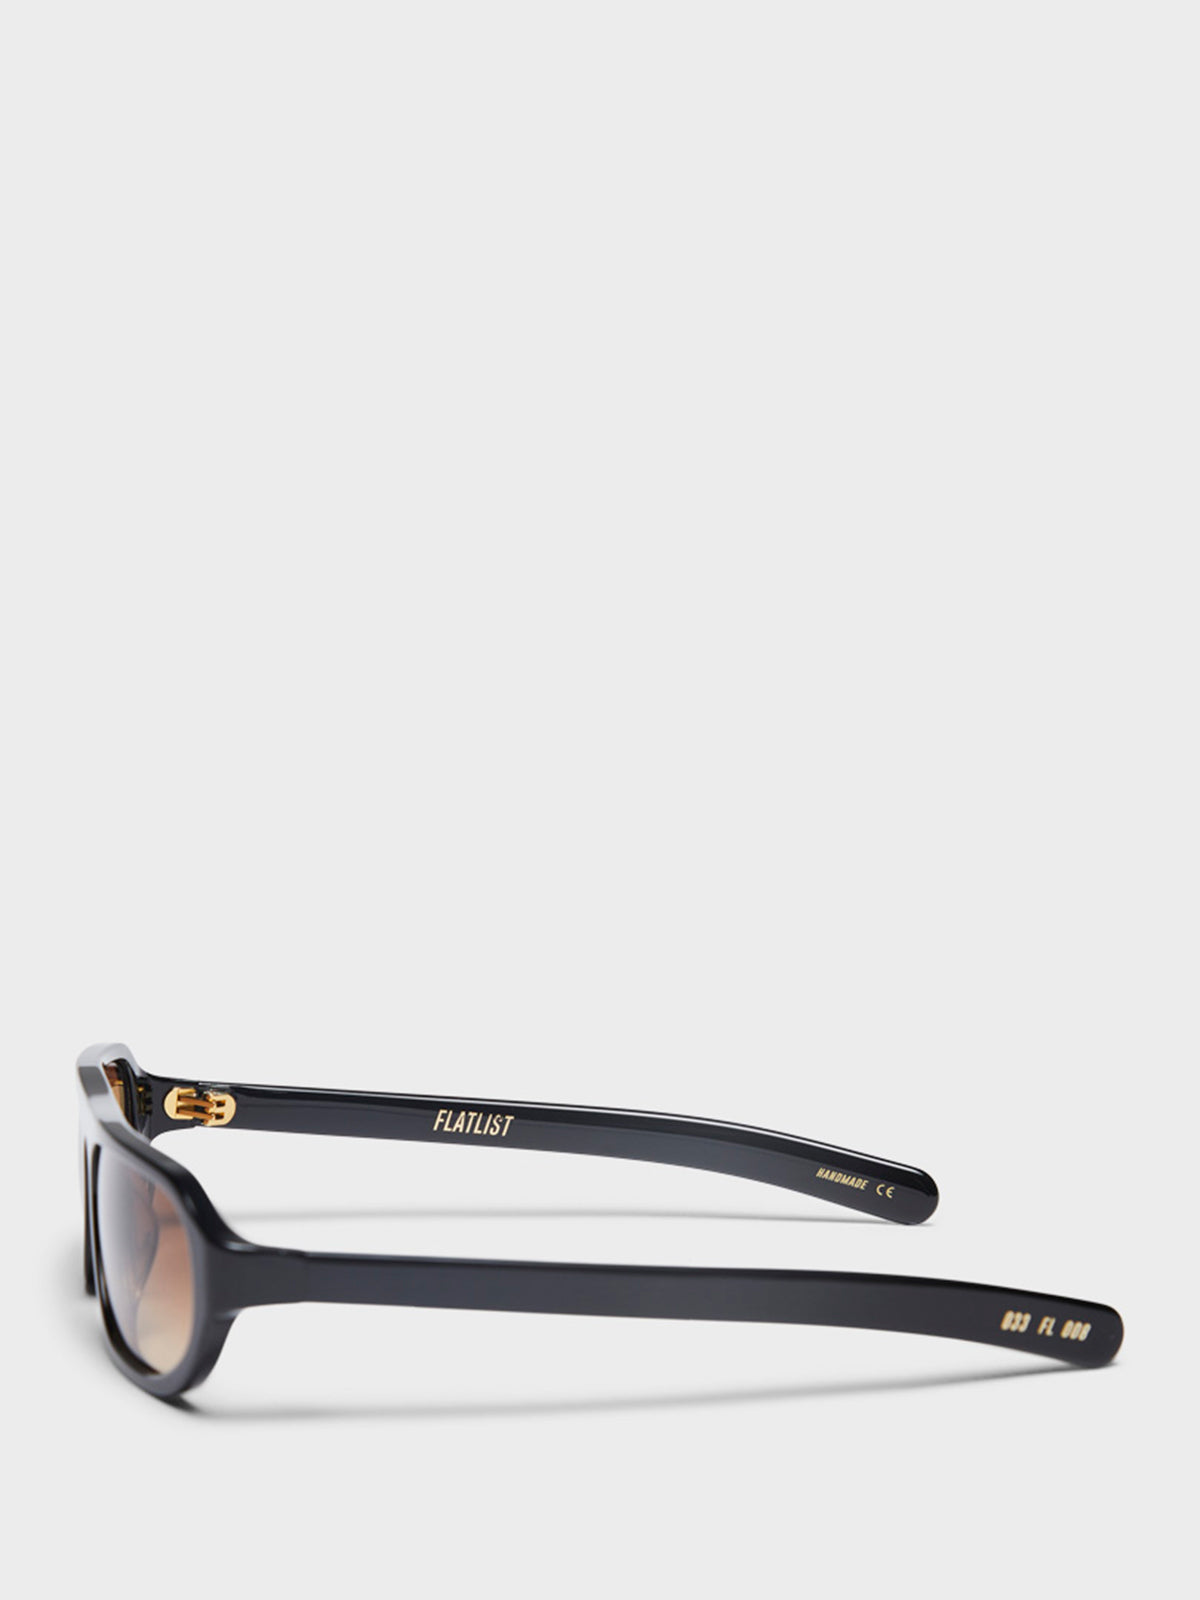 Penn Sunglasses in Solid Black